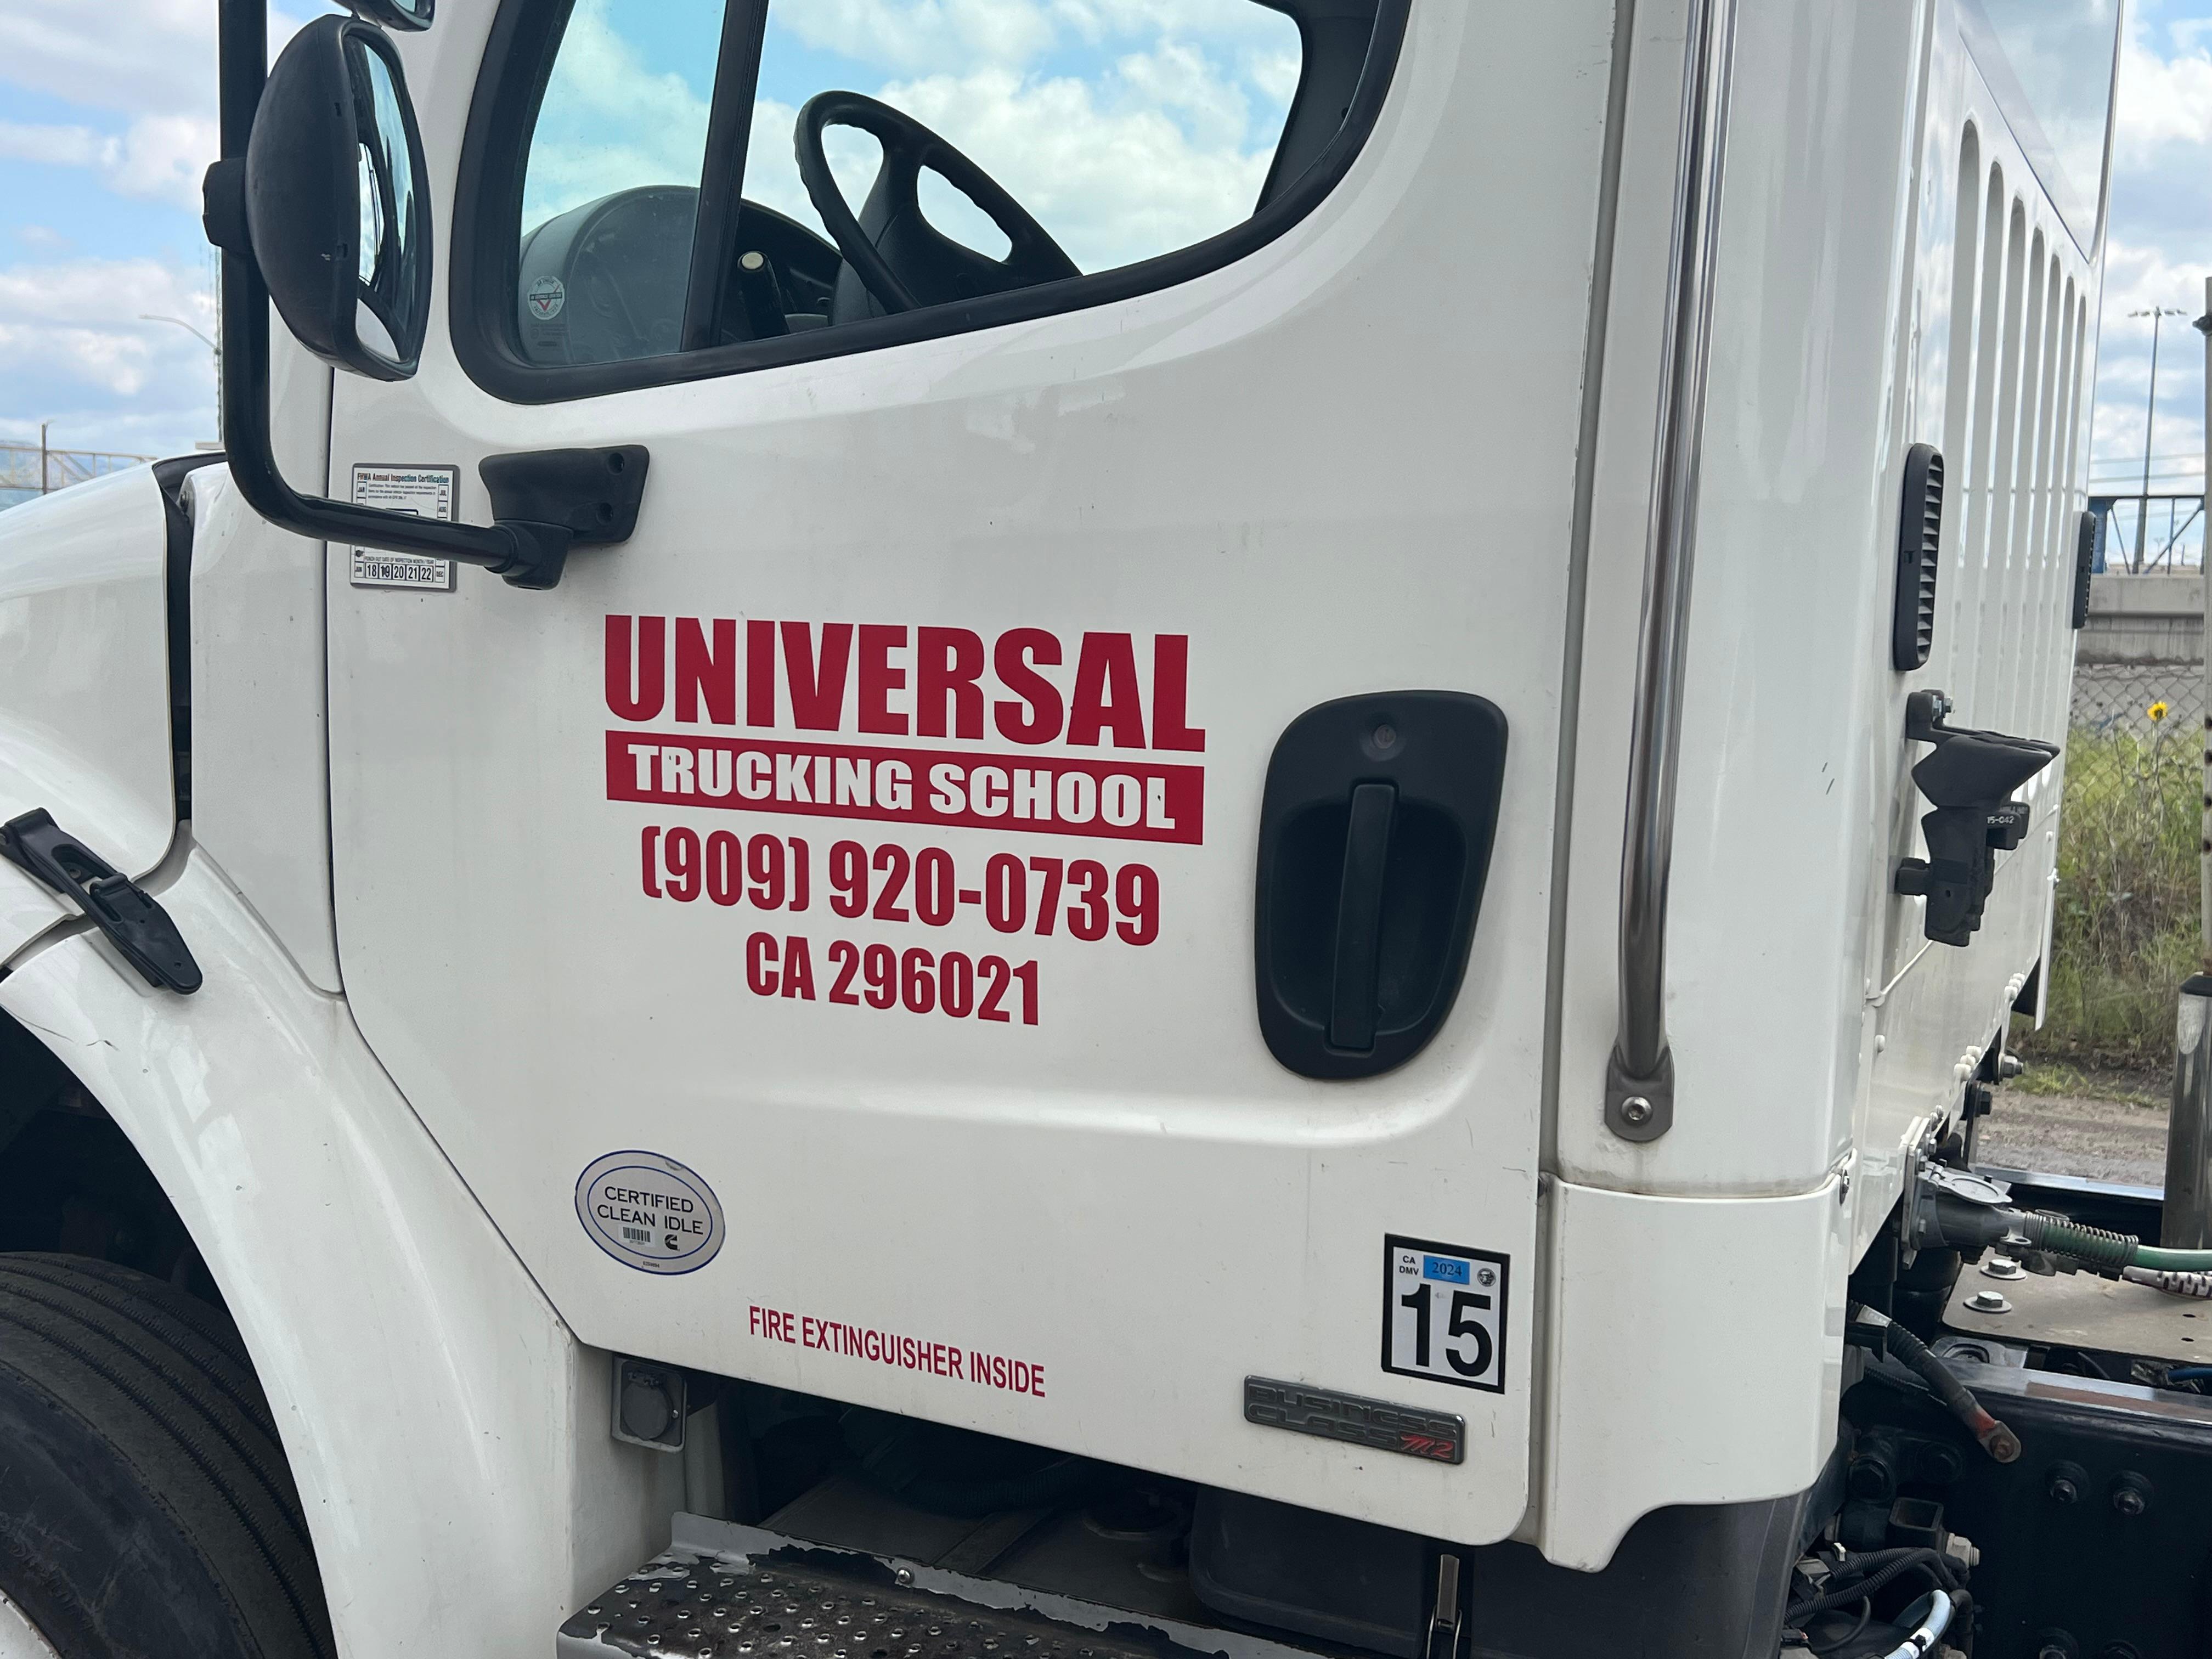 Universal Truck Driving School, Inc.-trailer license